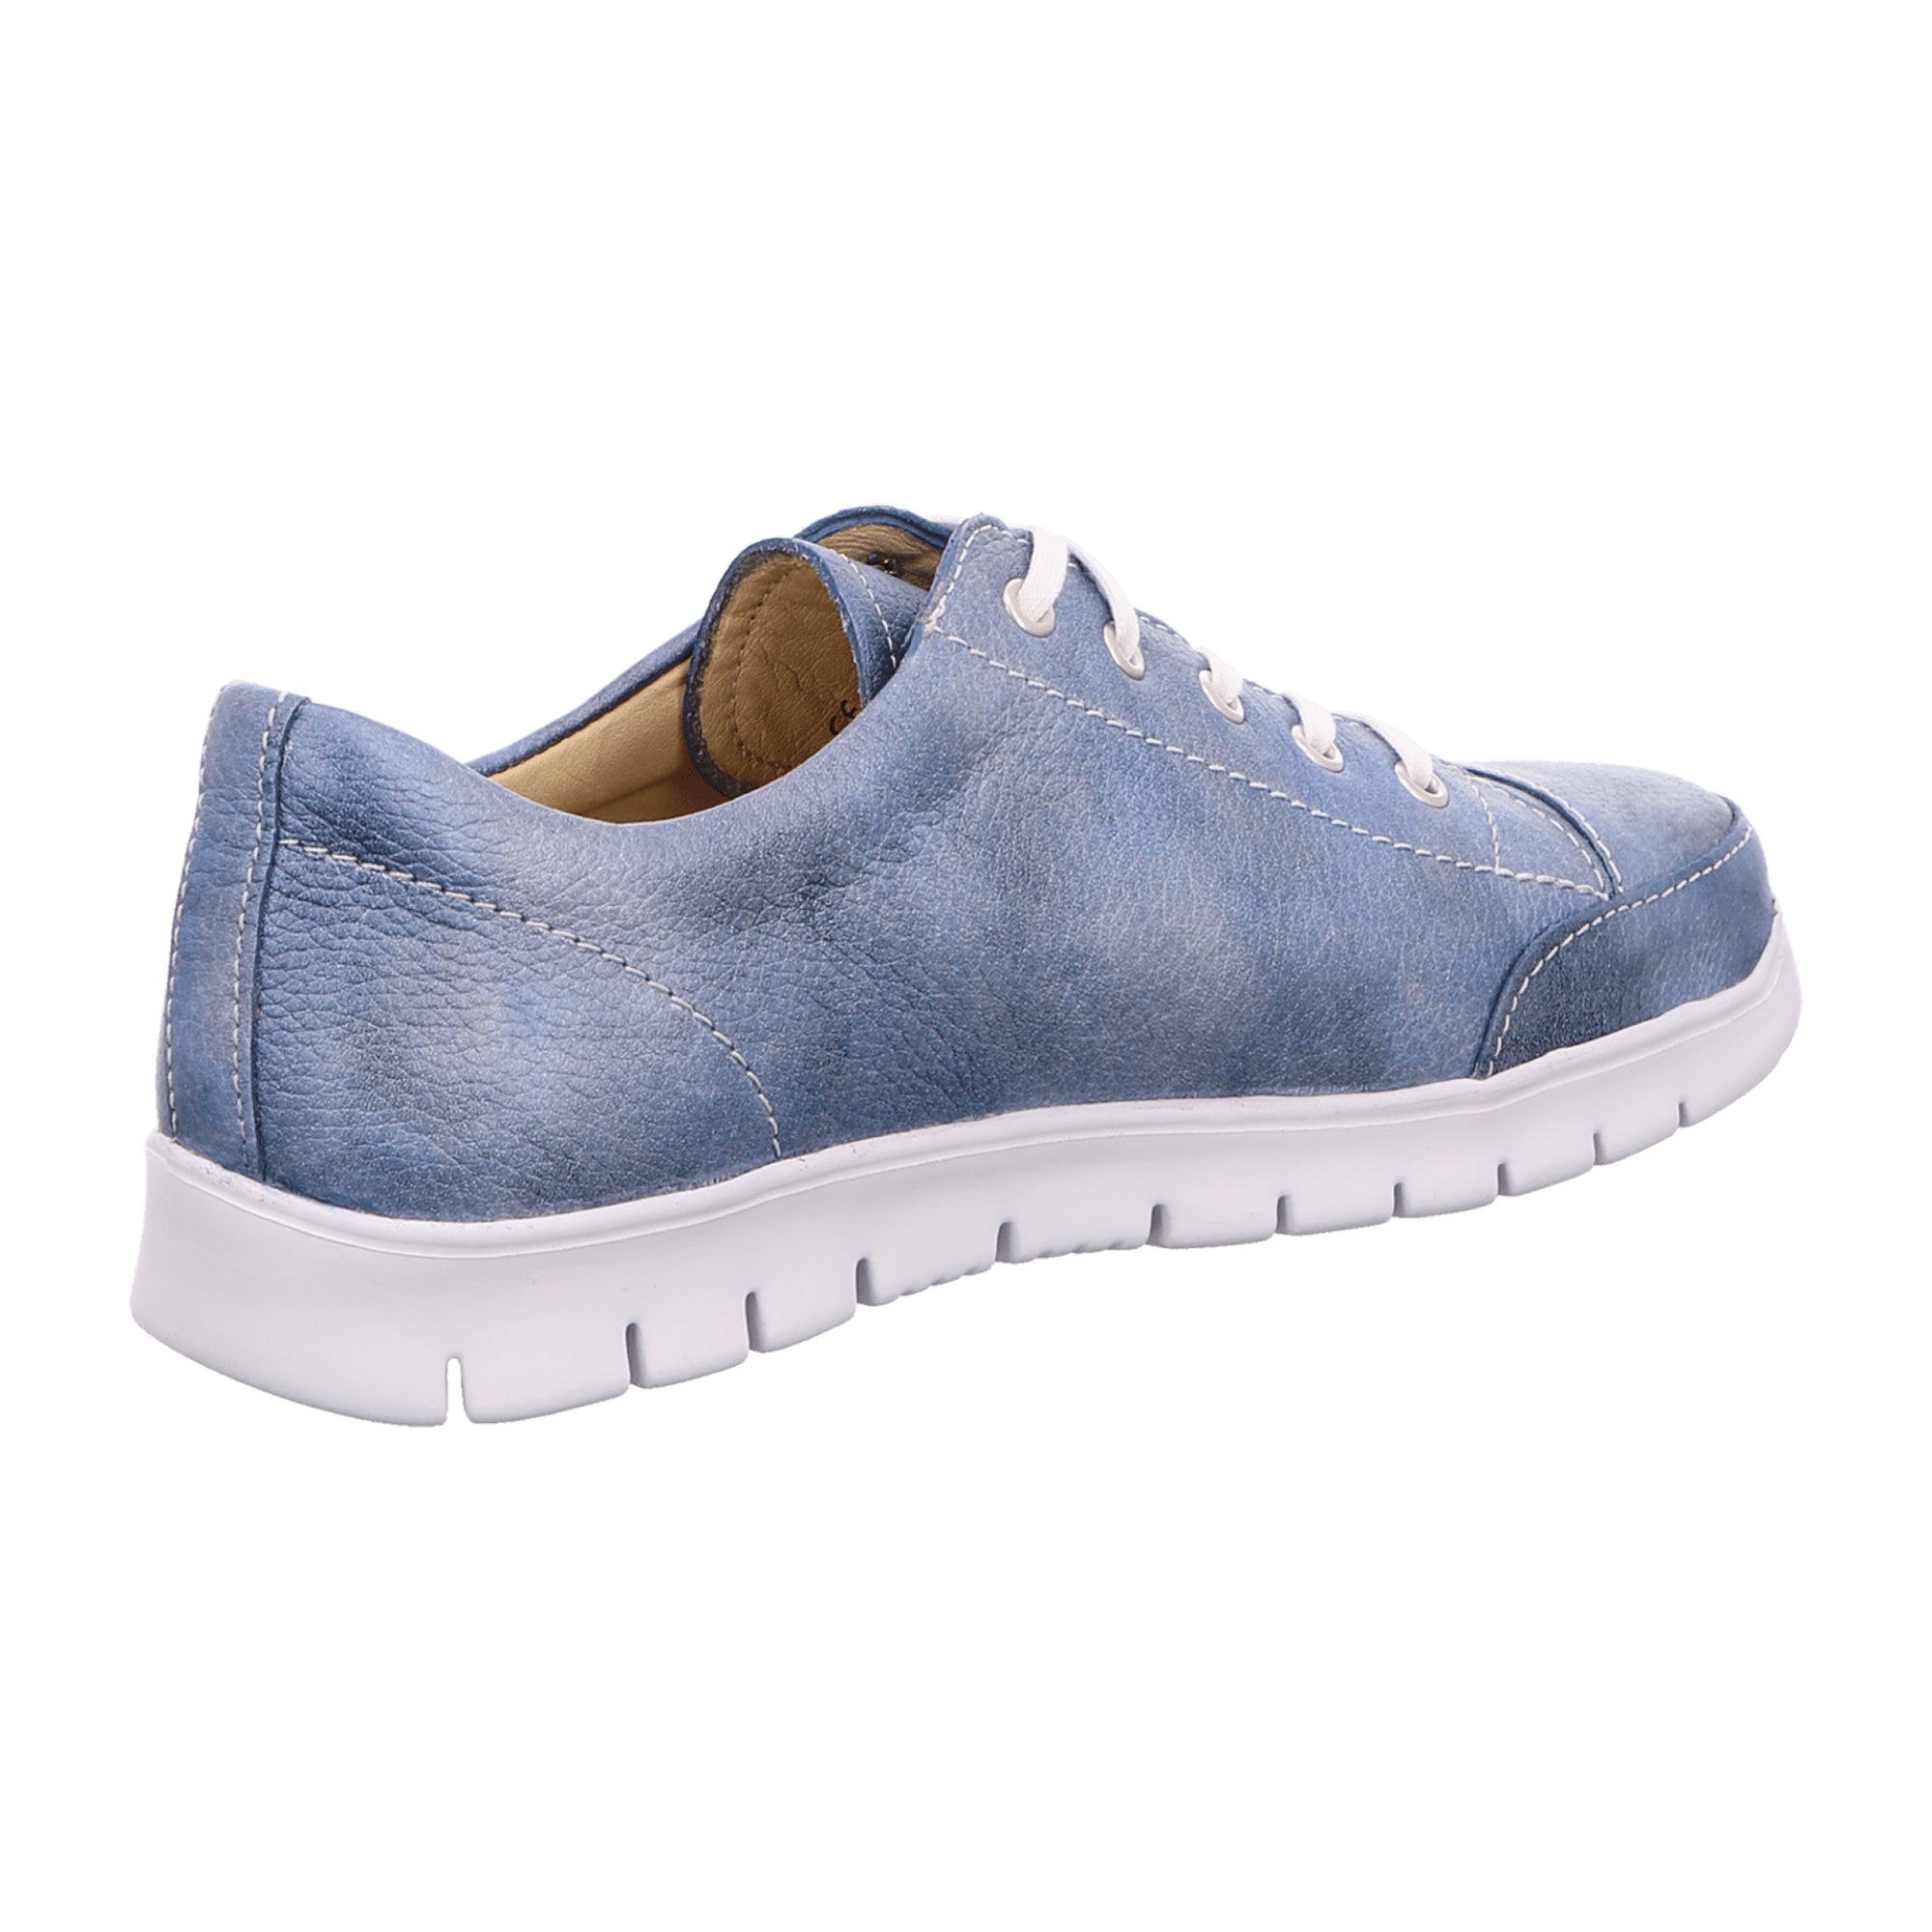 Finn Comfort Swansea Women's Blue Jeans-Inspired Comfort Shoes